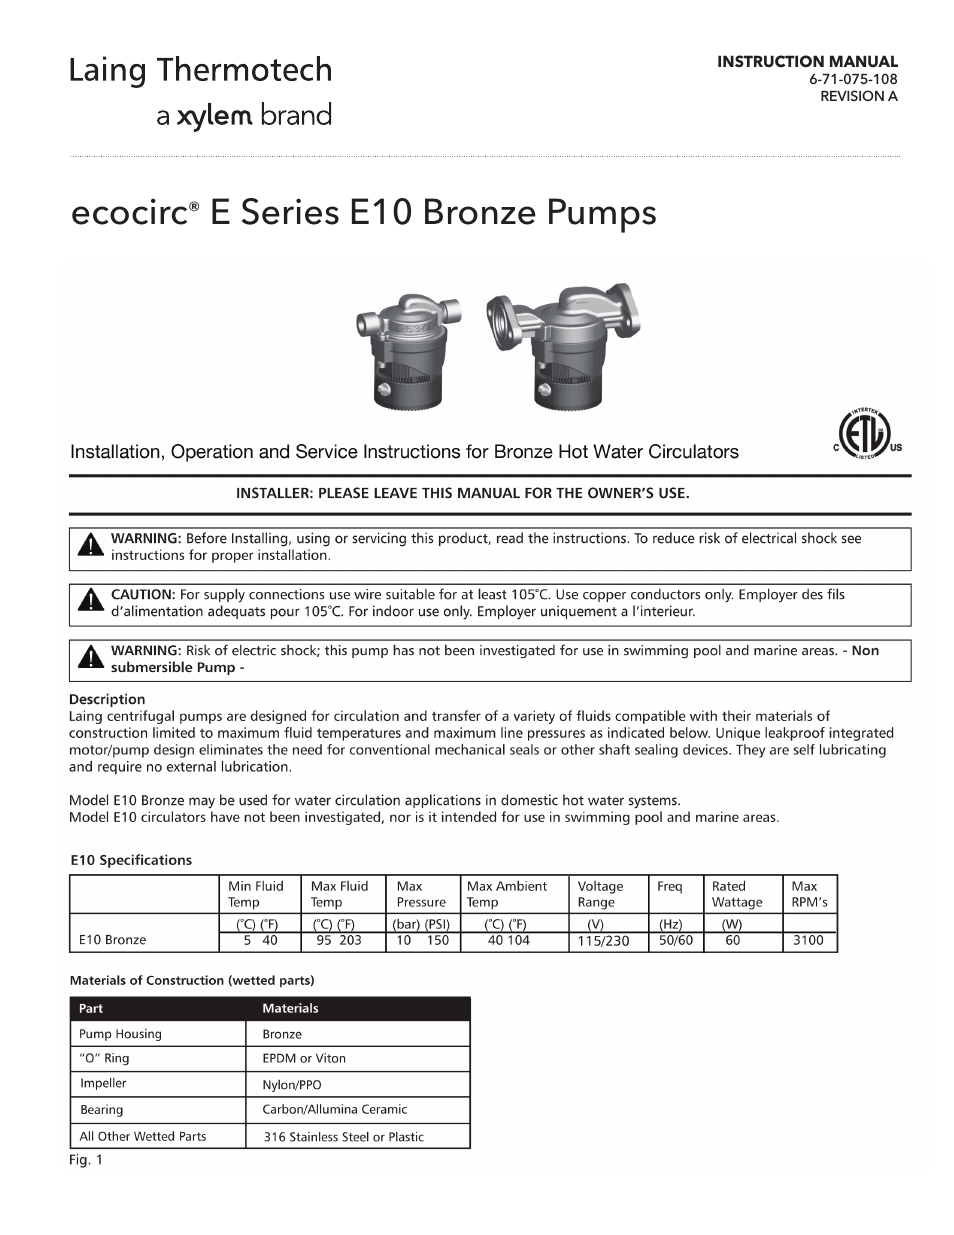 6 71 075 108A ecocirc E Series E10 Bronze Pumps